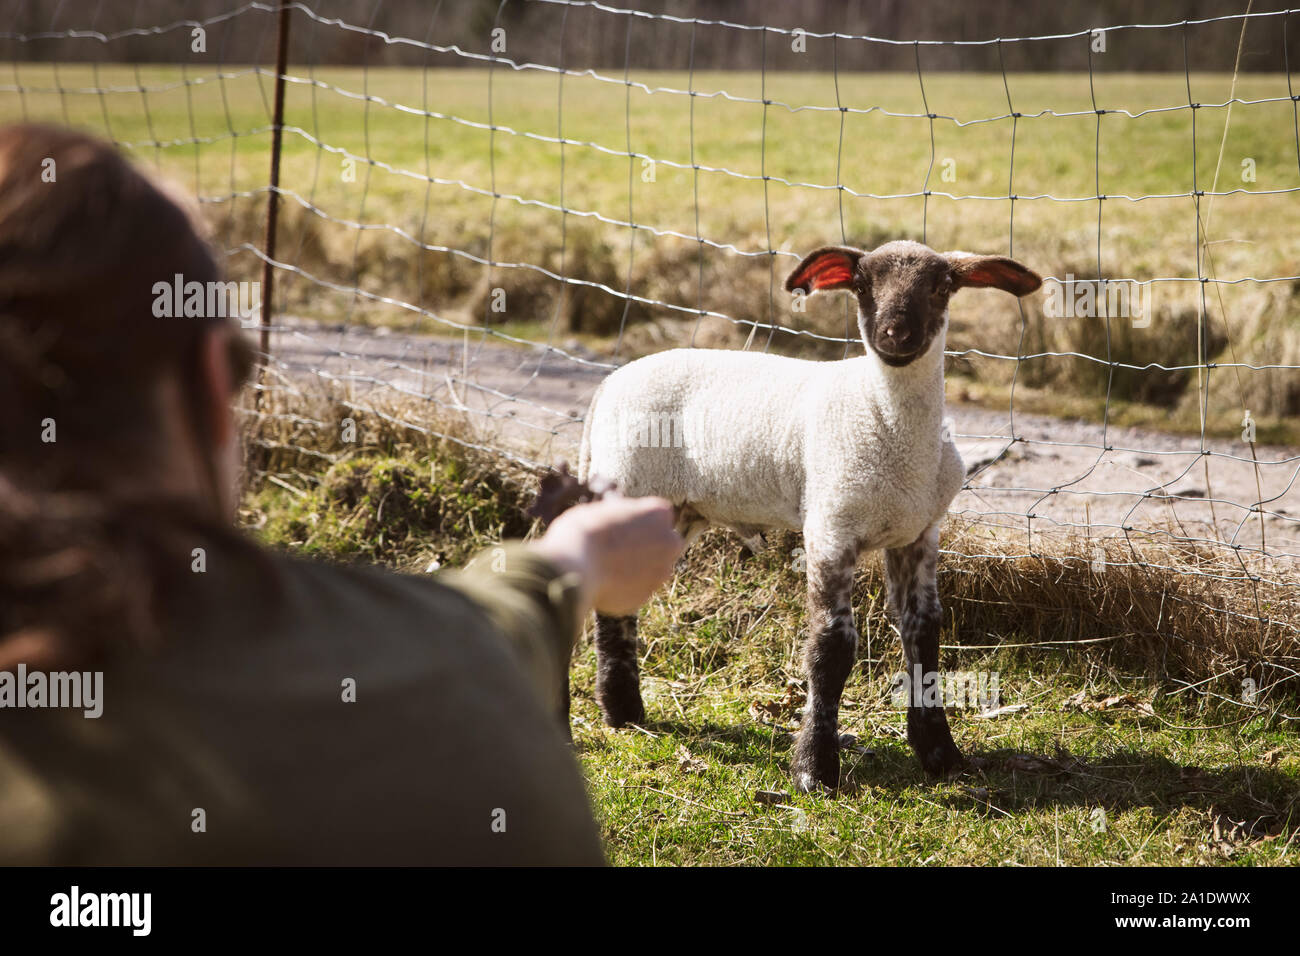 Woman luring a cute lamb, concept animal farming or petting farm Stock Photo